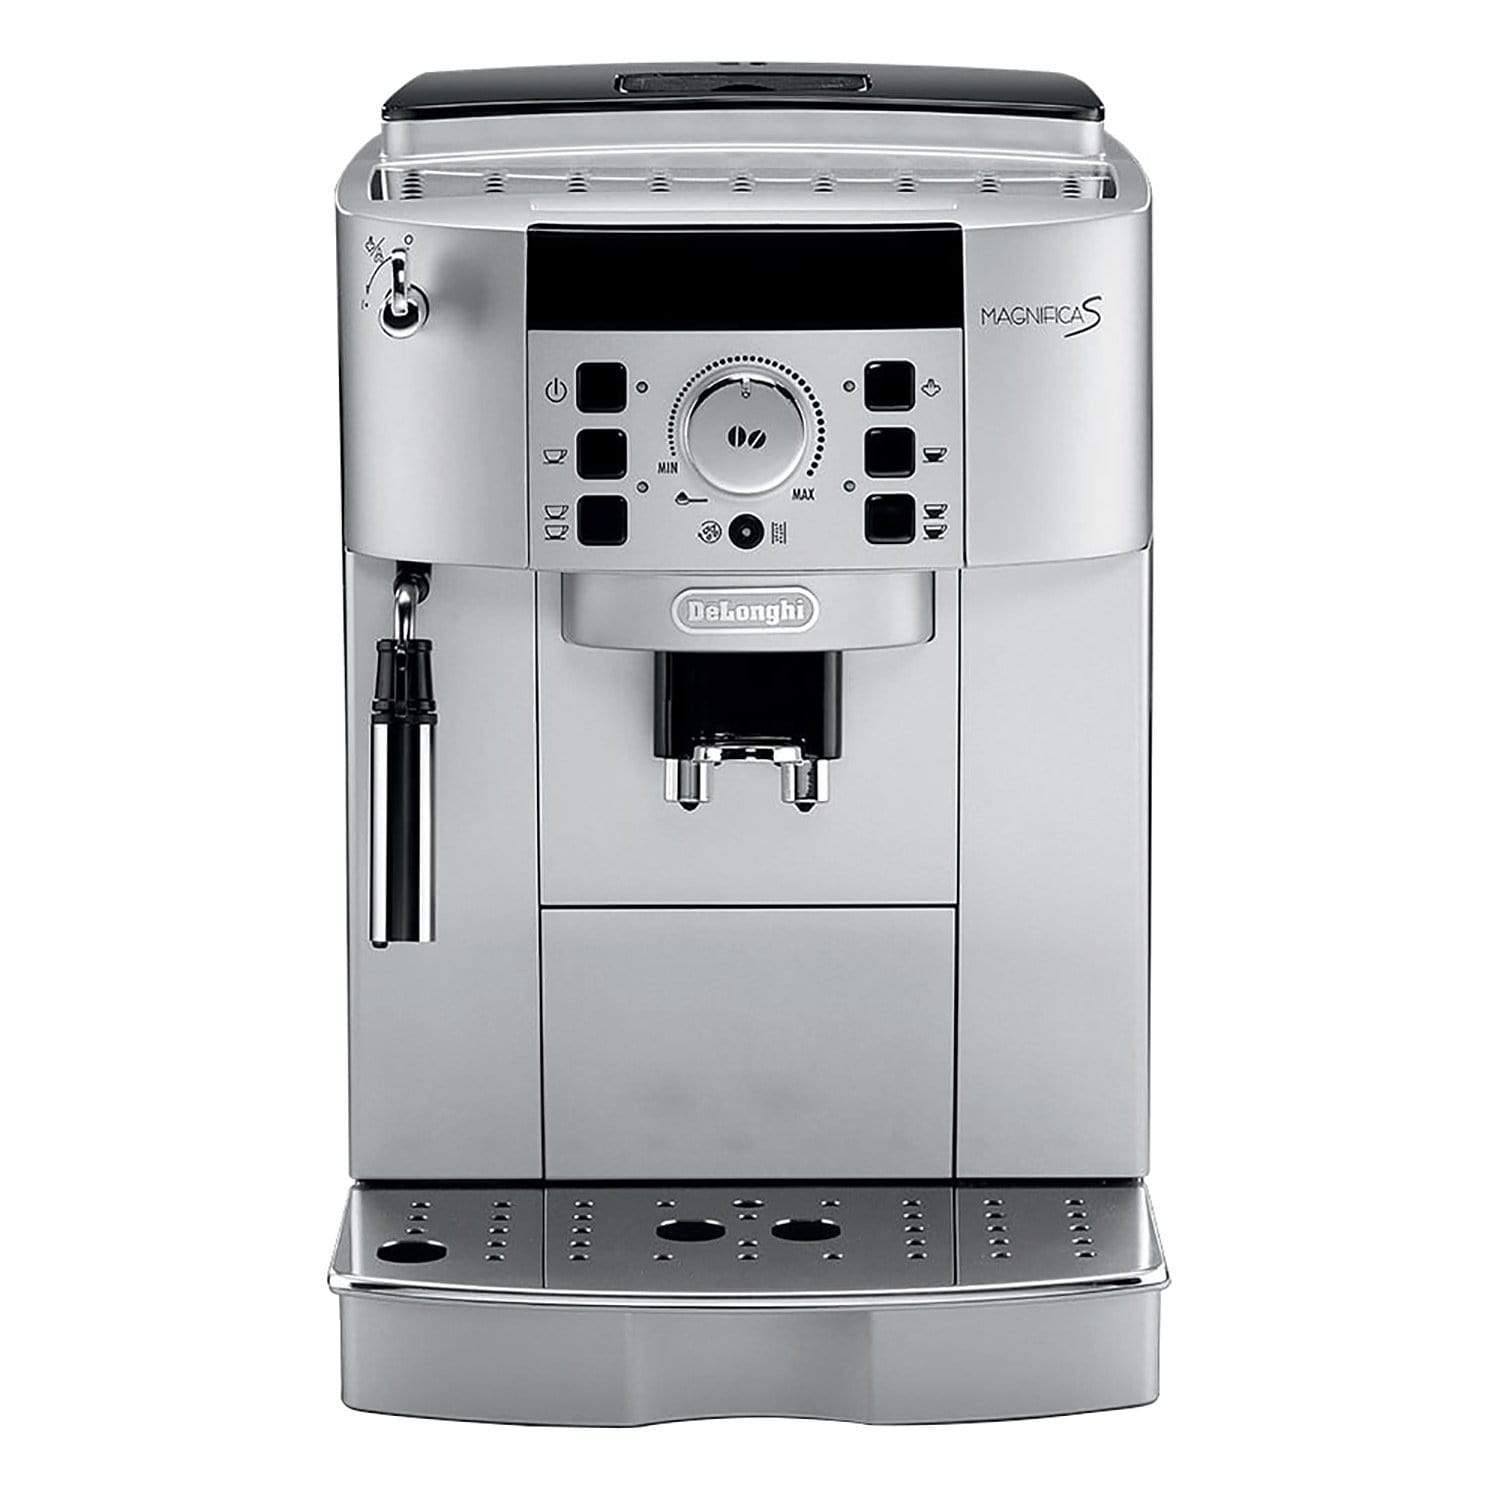 De'Longhi Magnificas Coffee Machine Silver - ECAM22 110 SB - Jashanmal Home